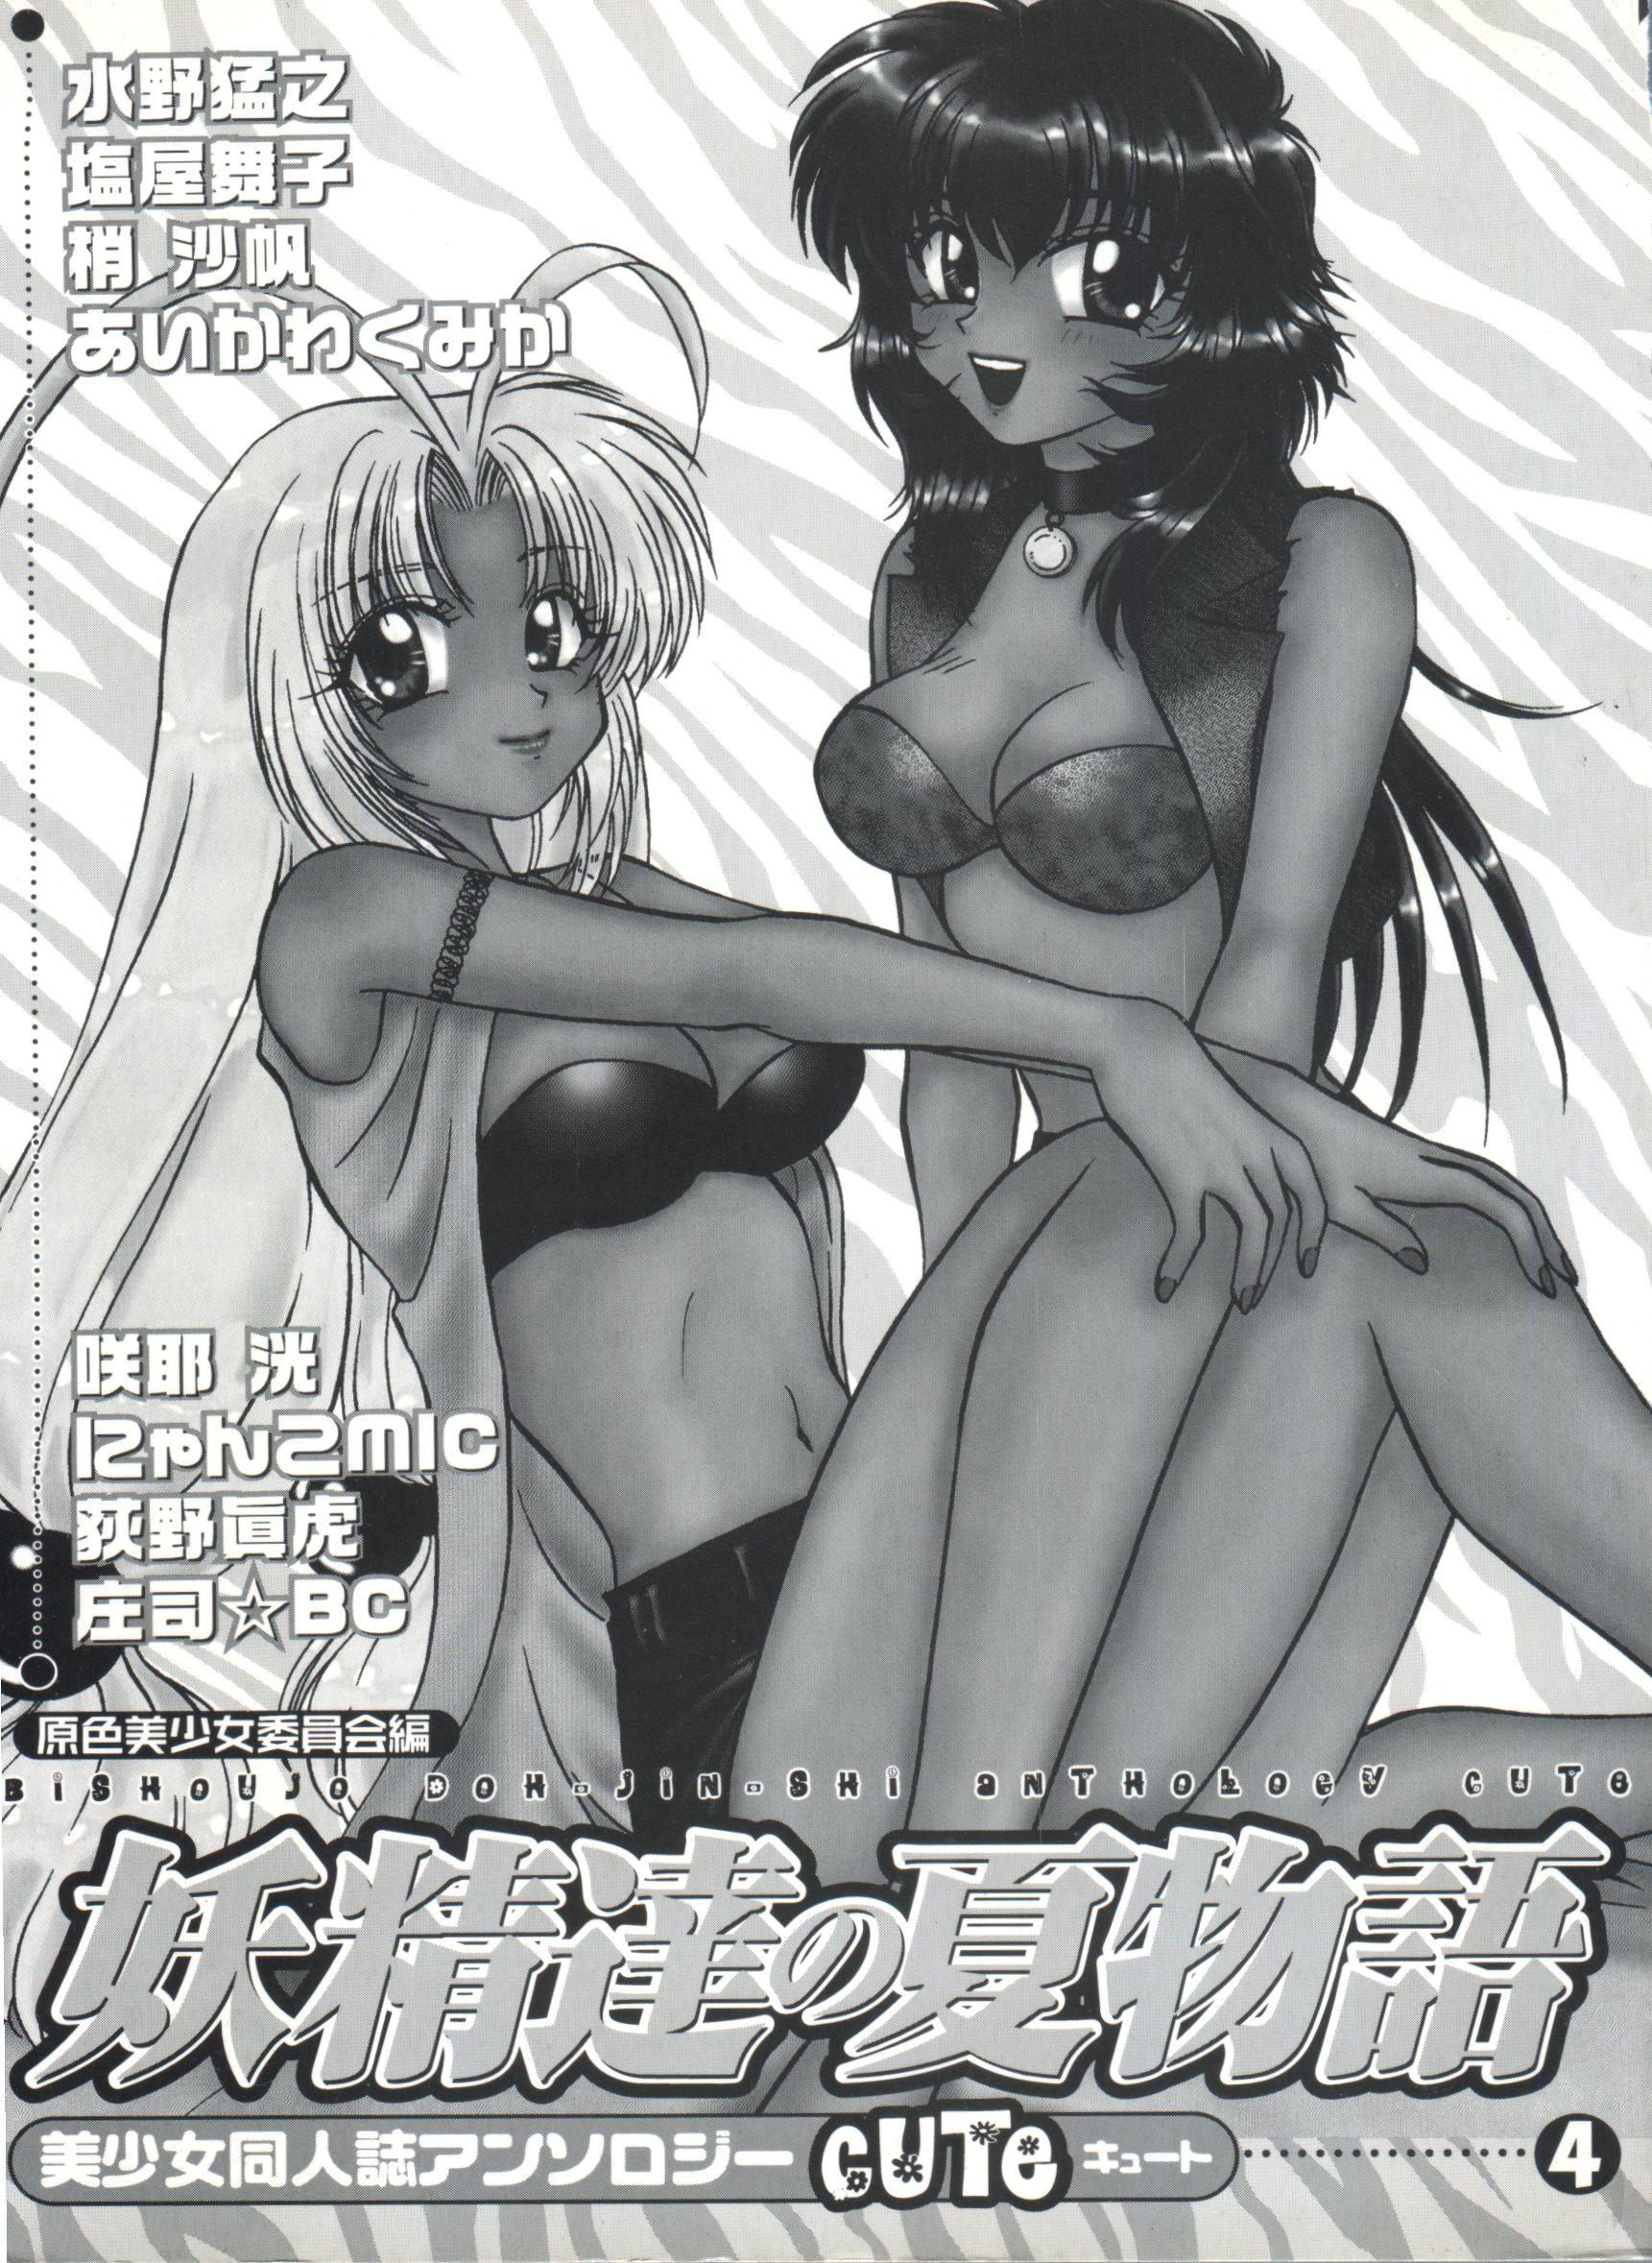 Real Amateur Porn Bishoujo Doujinshi Anthology Cute 4 - Sailor moon To heart Magic knight rayearth Kare kano Yu yu hakusho Kamikaze kaitou jeanne Shavedpussy - Page 2